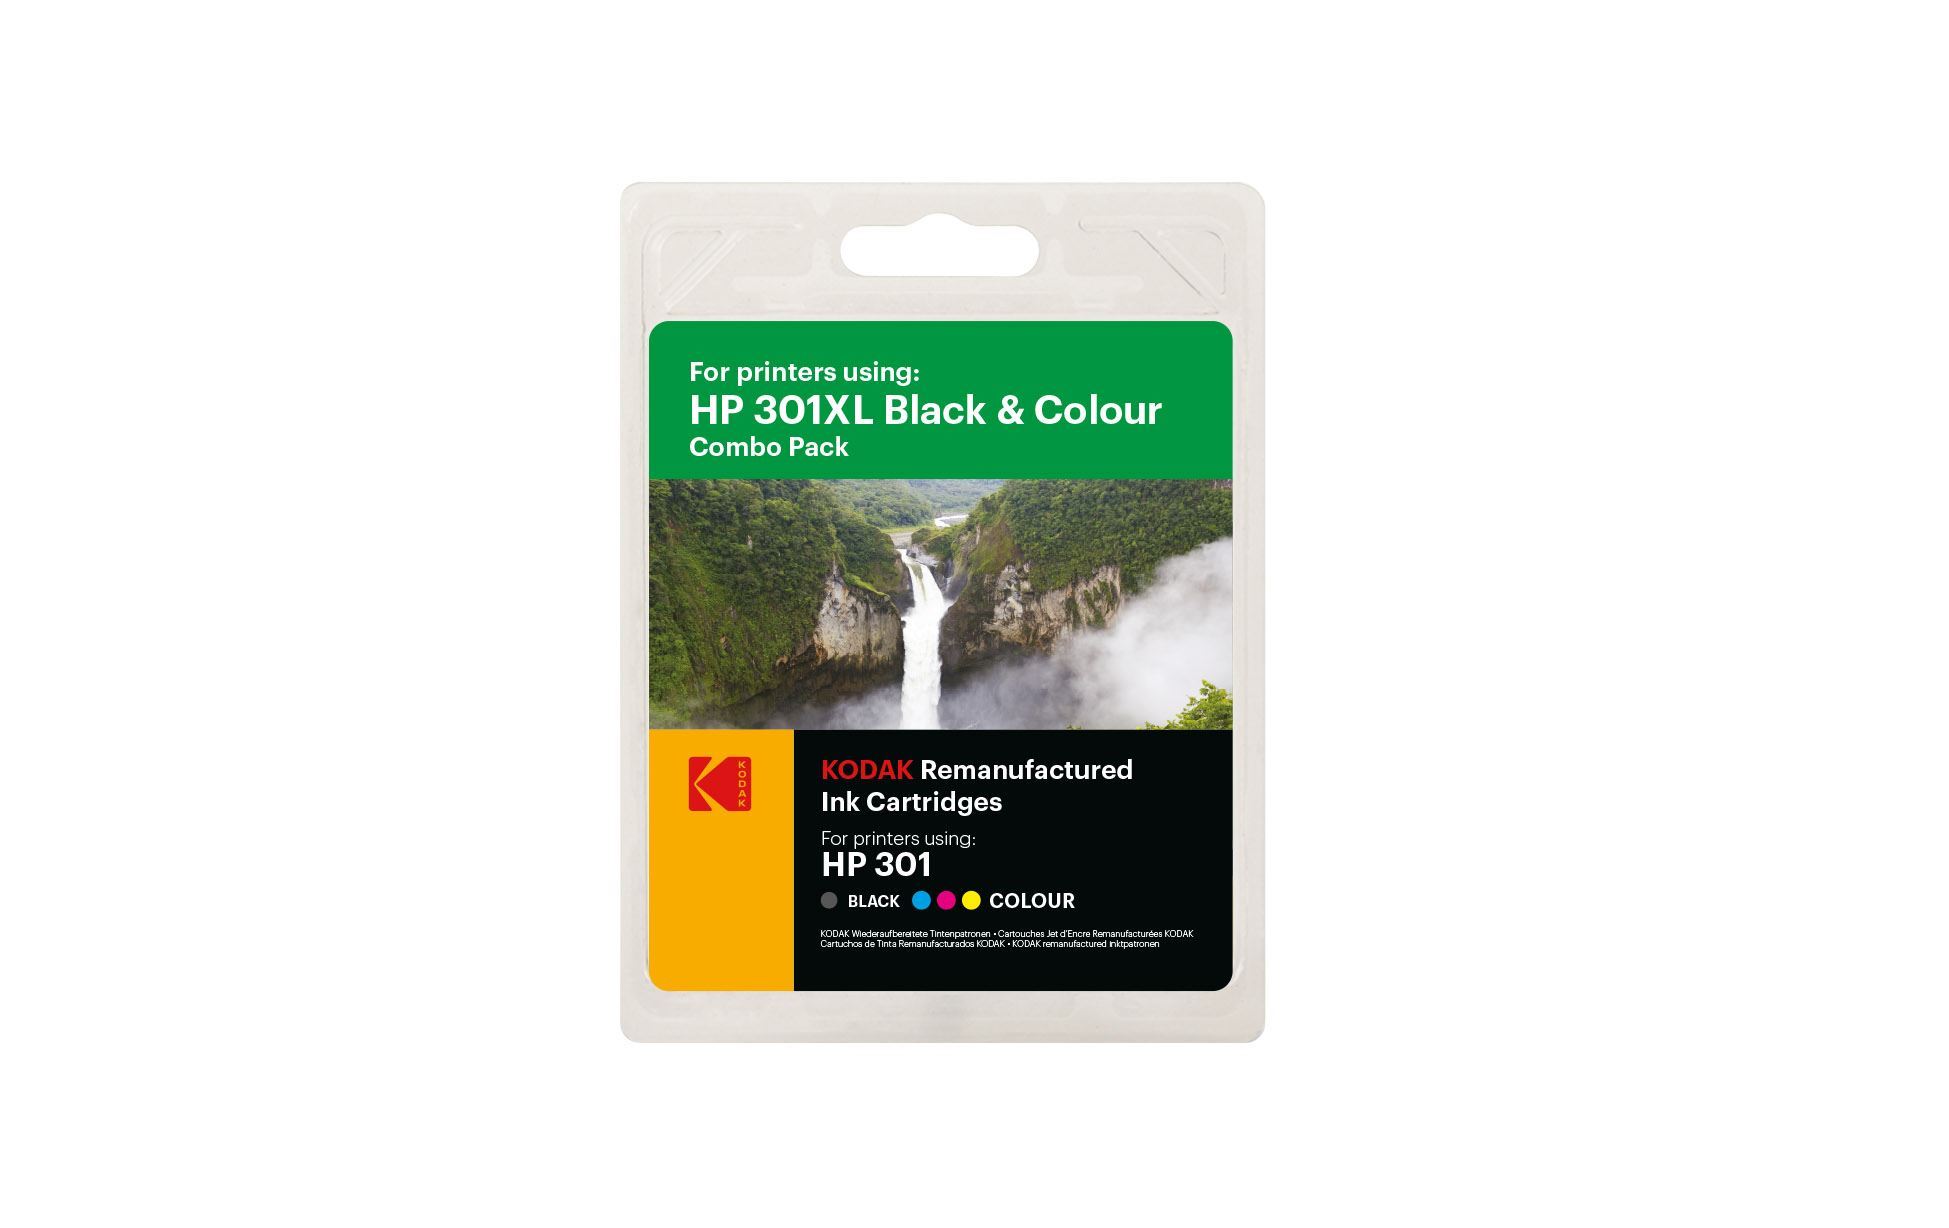 | 301XL Colour & Ink Red Bus HP Black Kodak Cartridges Cartridges Replacement